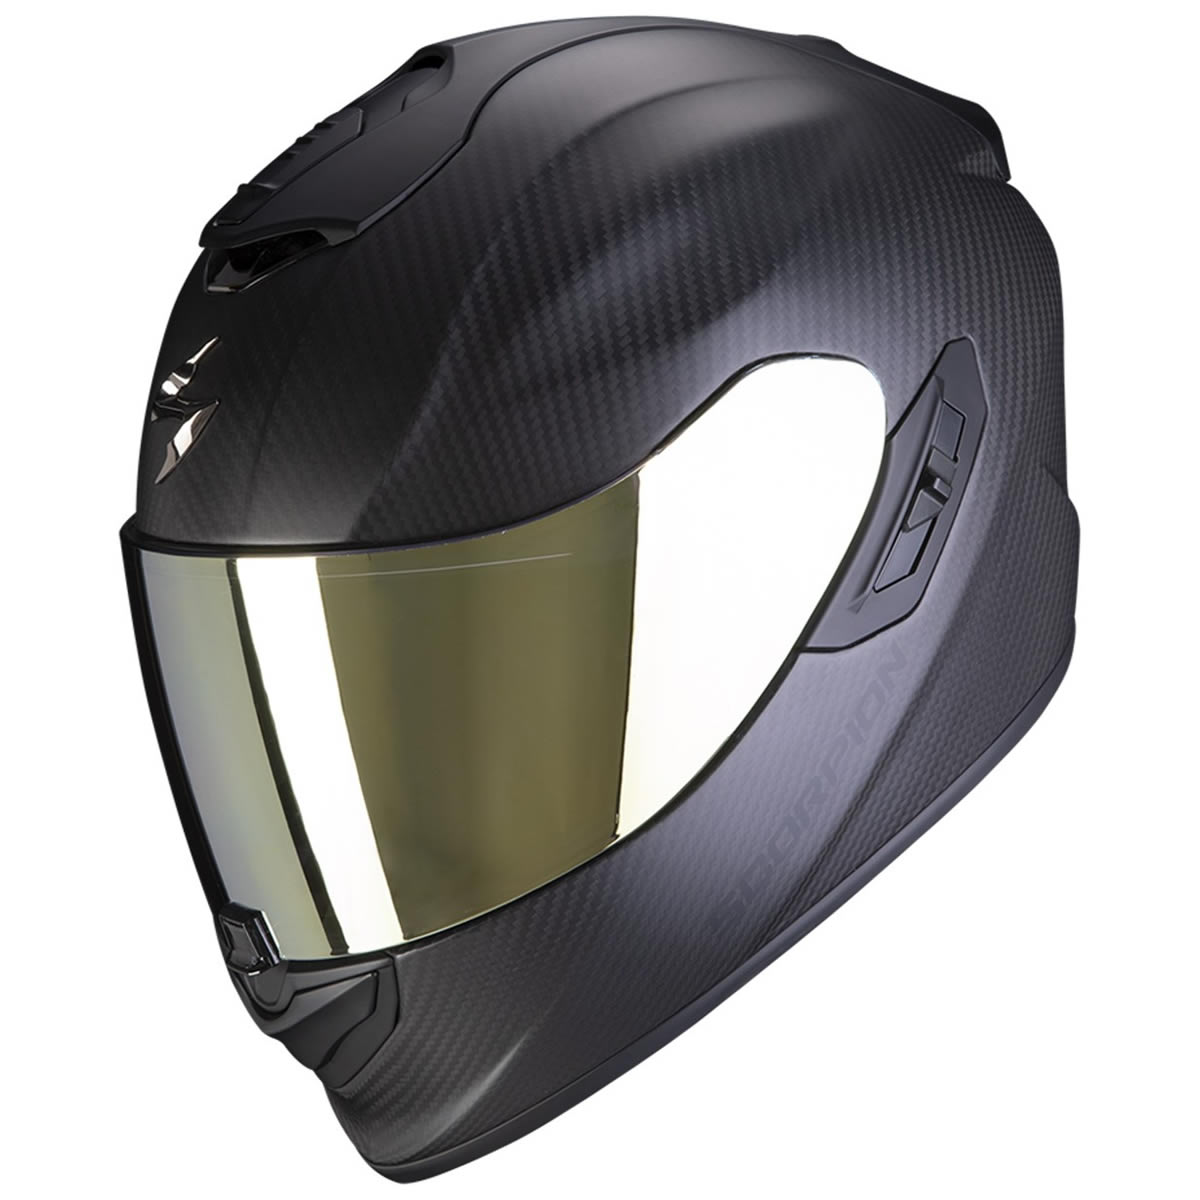 Scorpion EXO-1400 EVO II Carbon Air Solid Helm, schwarz matt